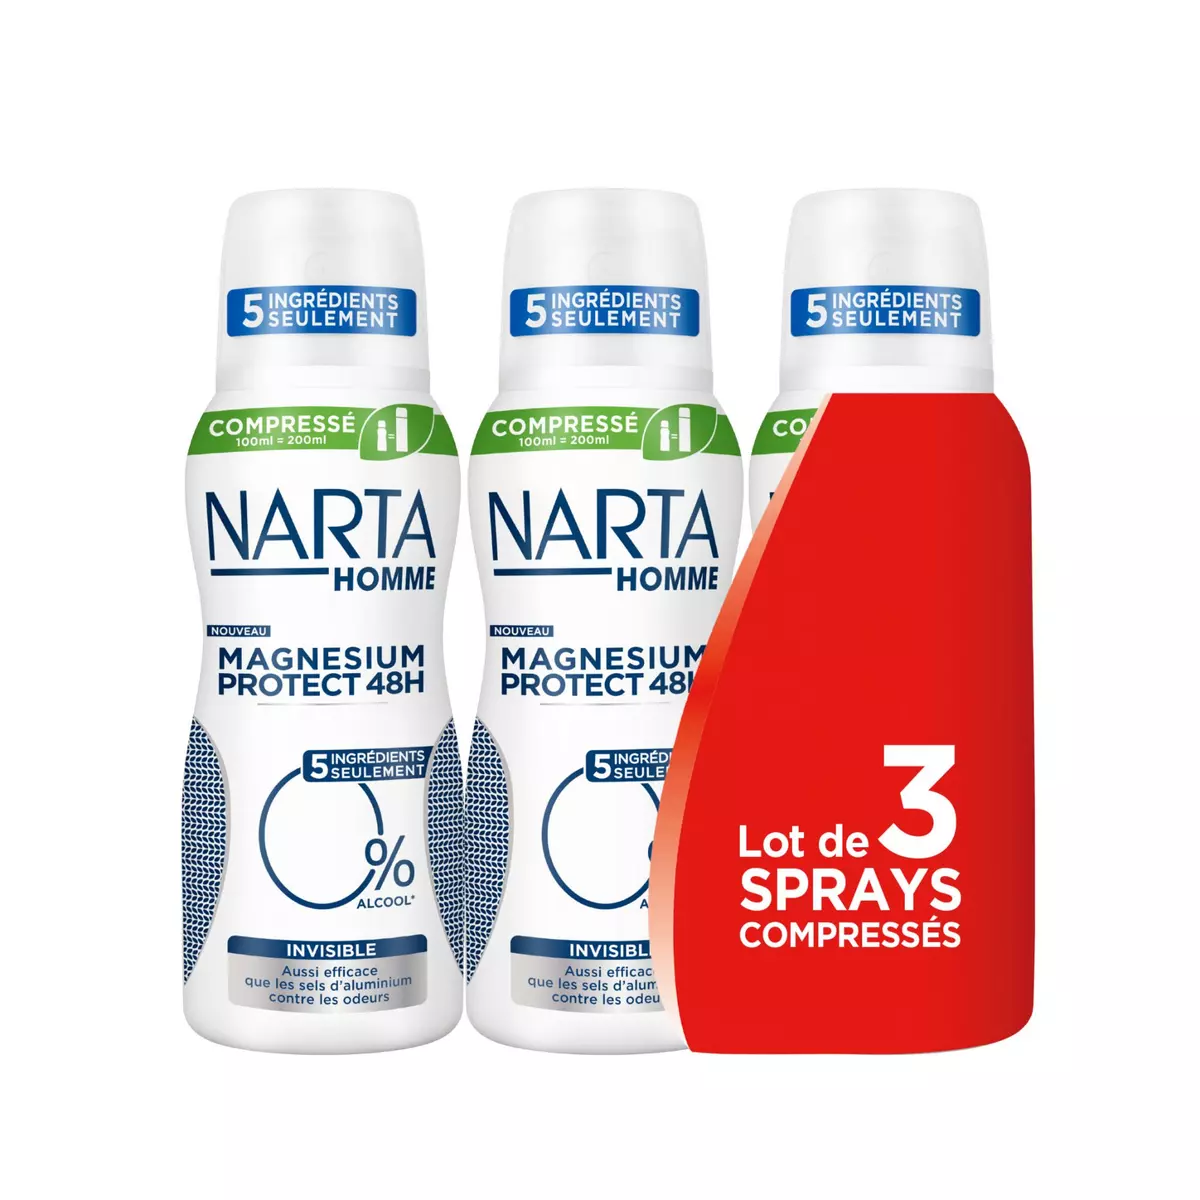 NARTA Déodorant spray compressé magnésium protect 48h homme sans alcool 2x100ml